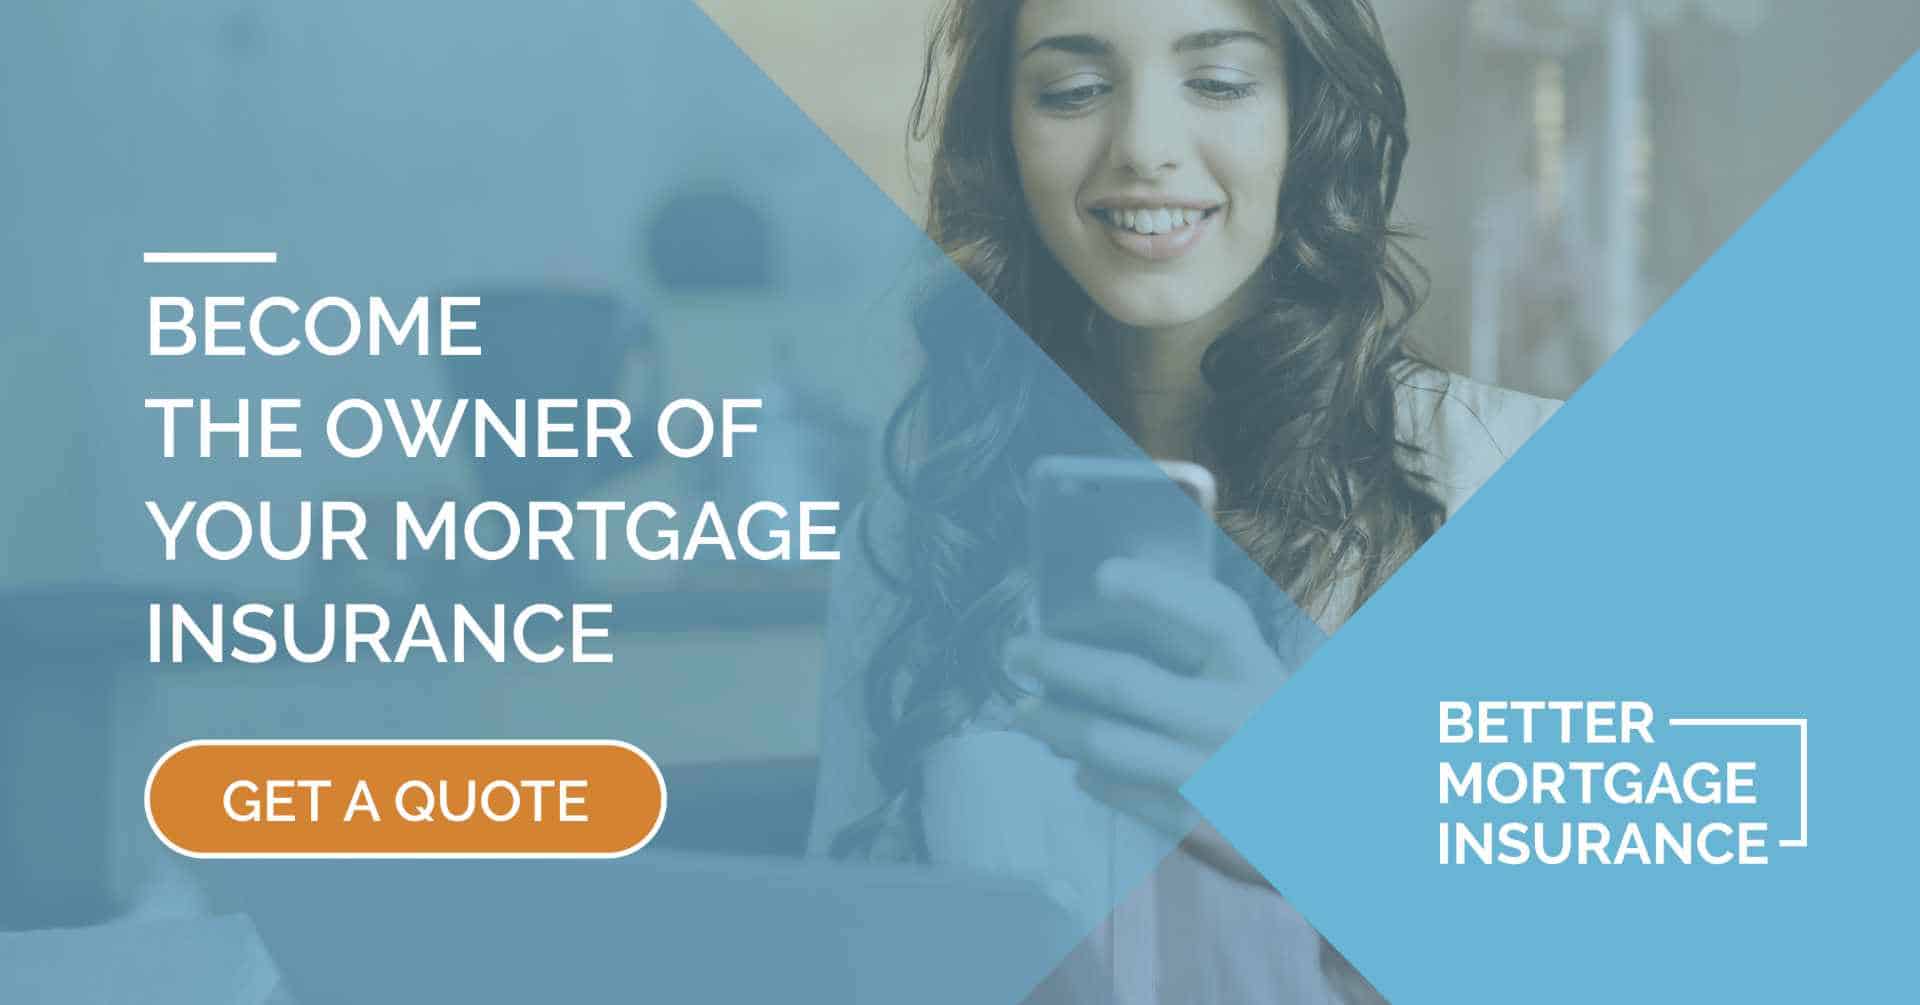 Better Mortgage Insurance